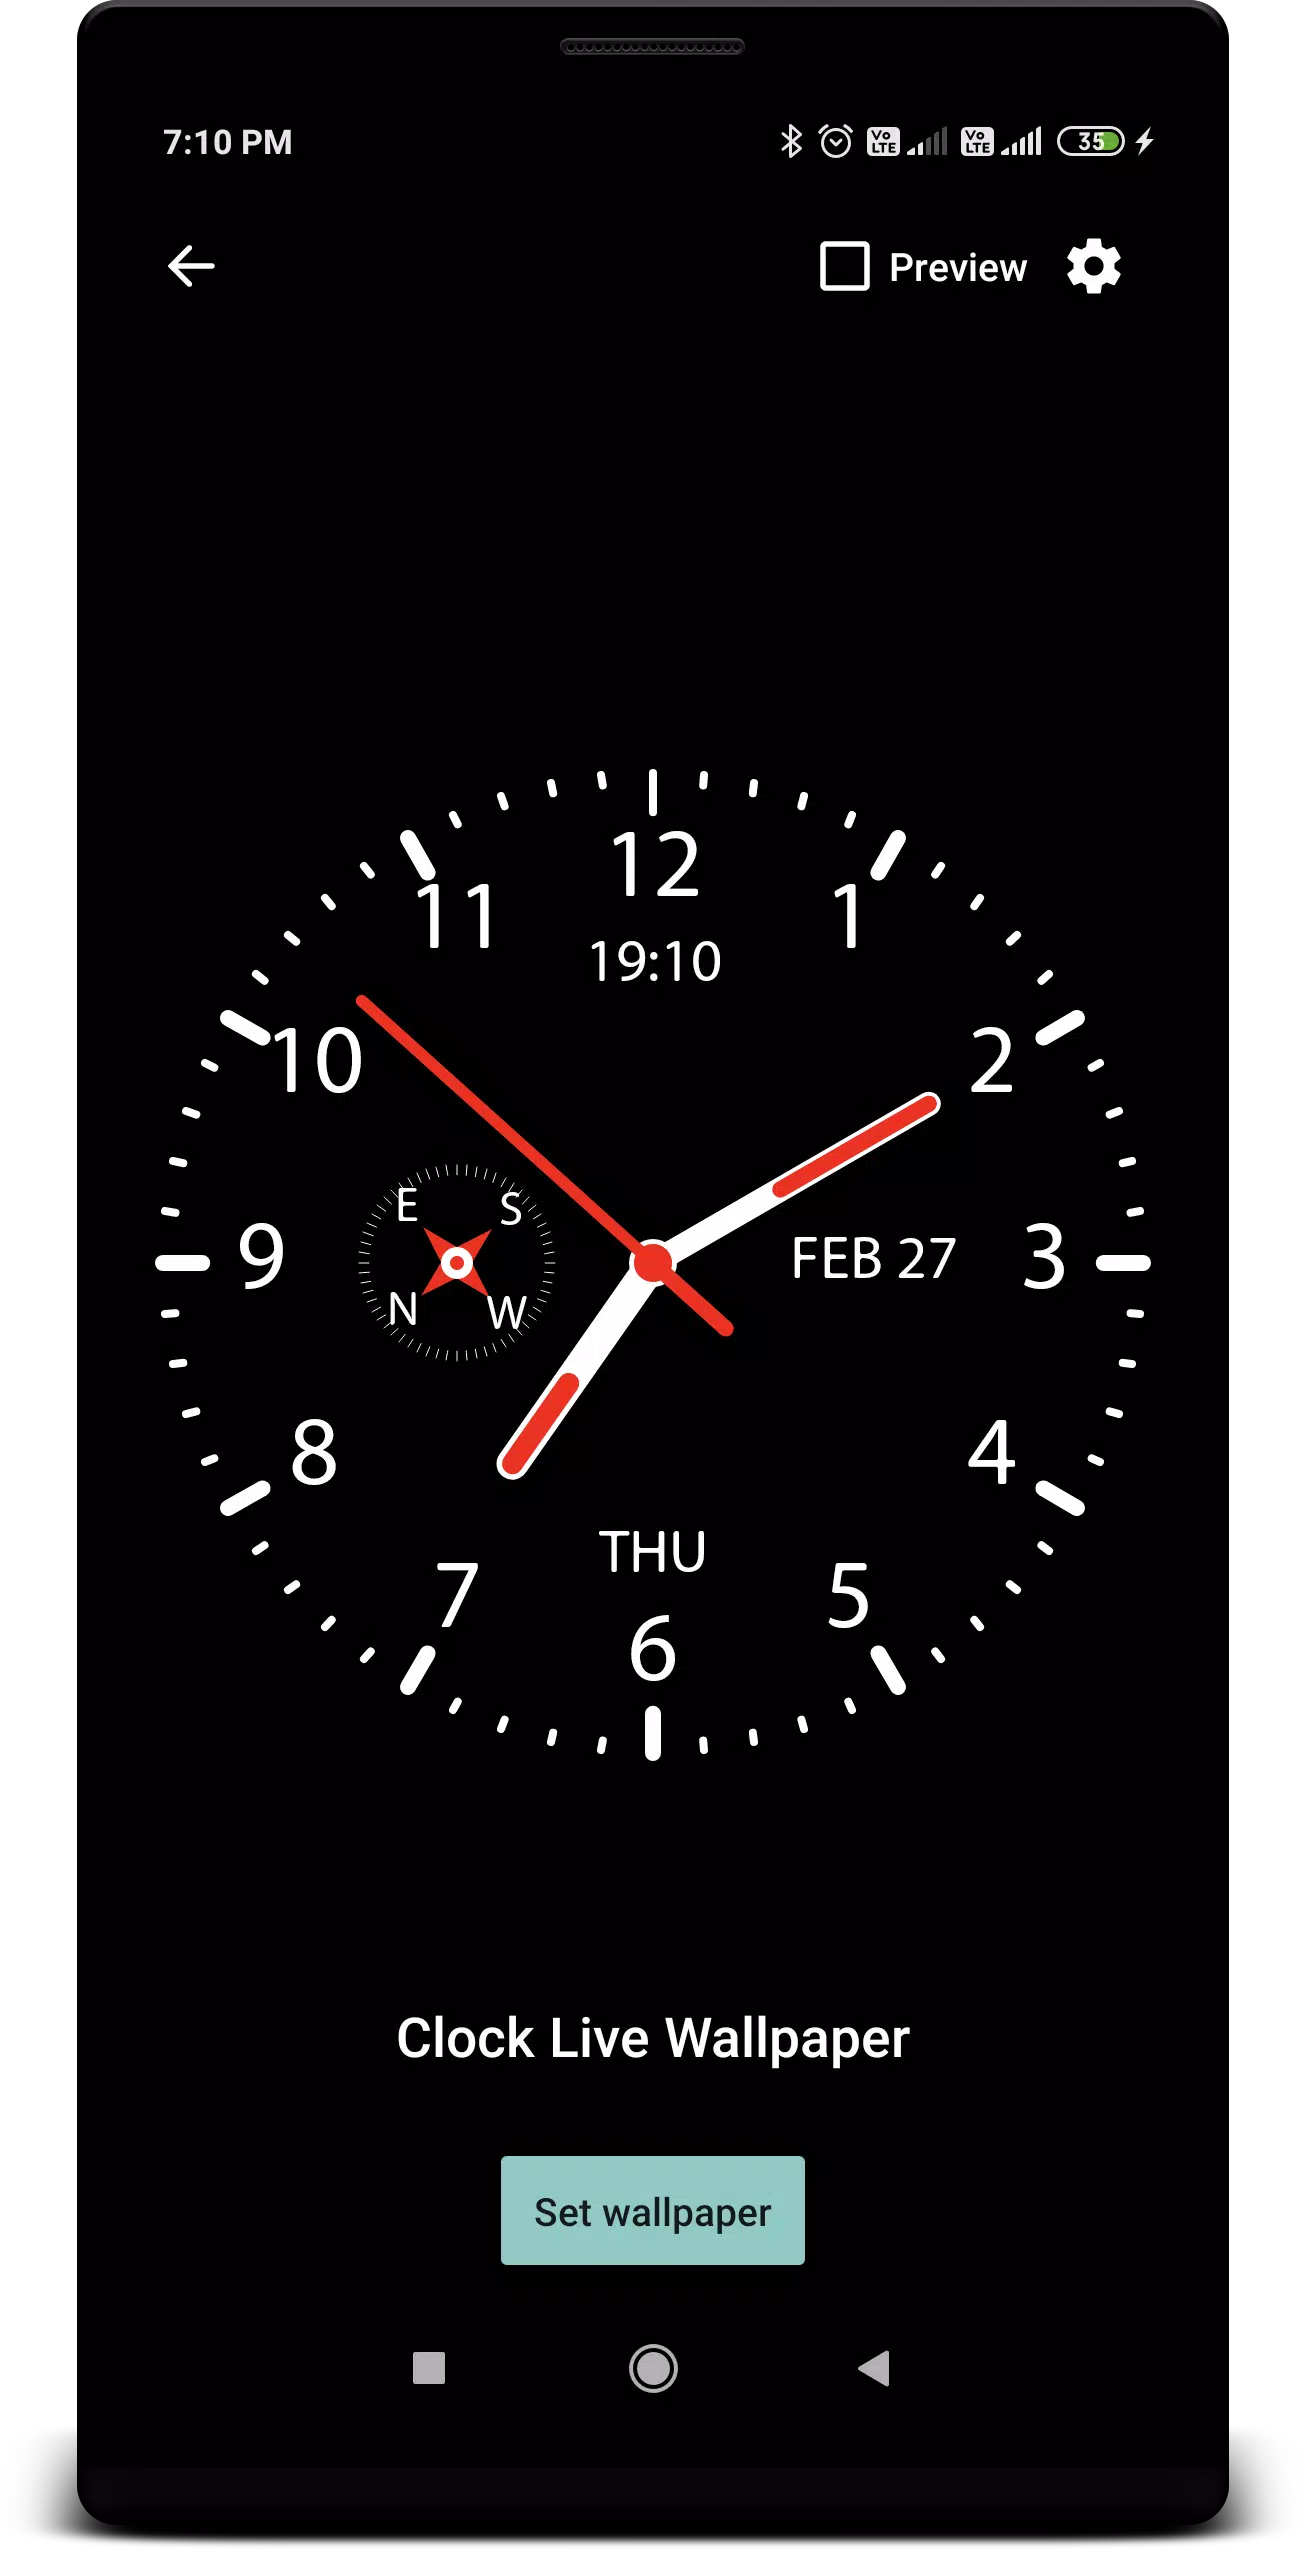 Аналоговые часы для андроид 4.2.2. Аналоговые часы для андроид. Живые часы на экран блокировки. Живые обои часы для андроид. Установить живые часы